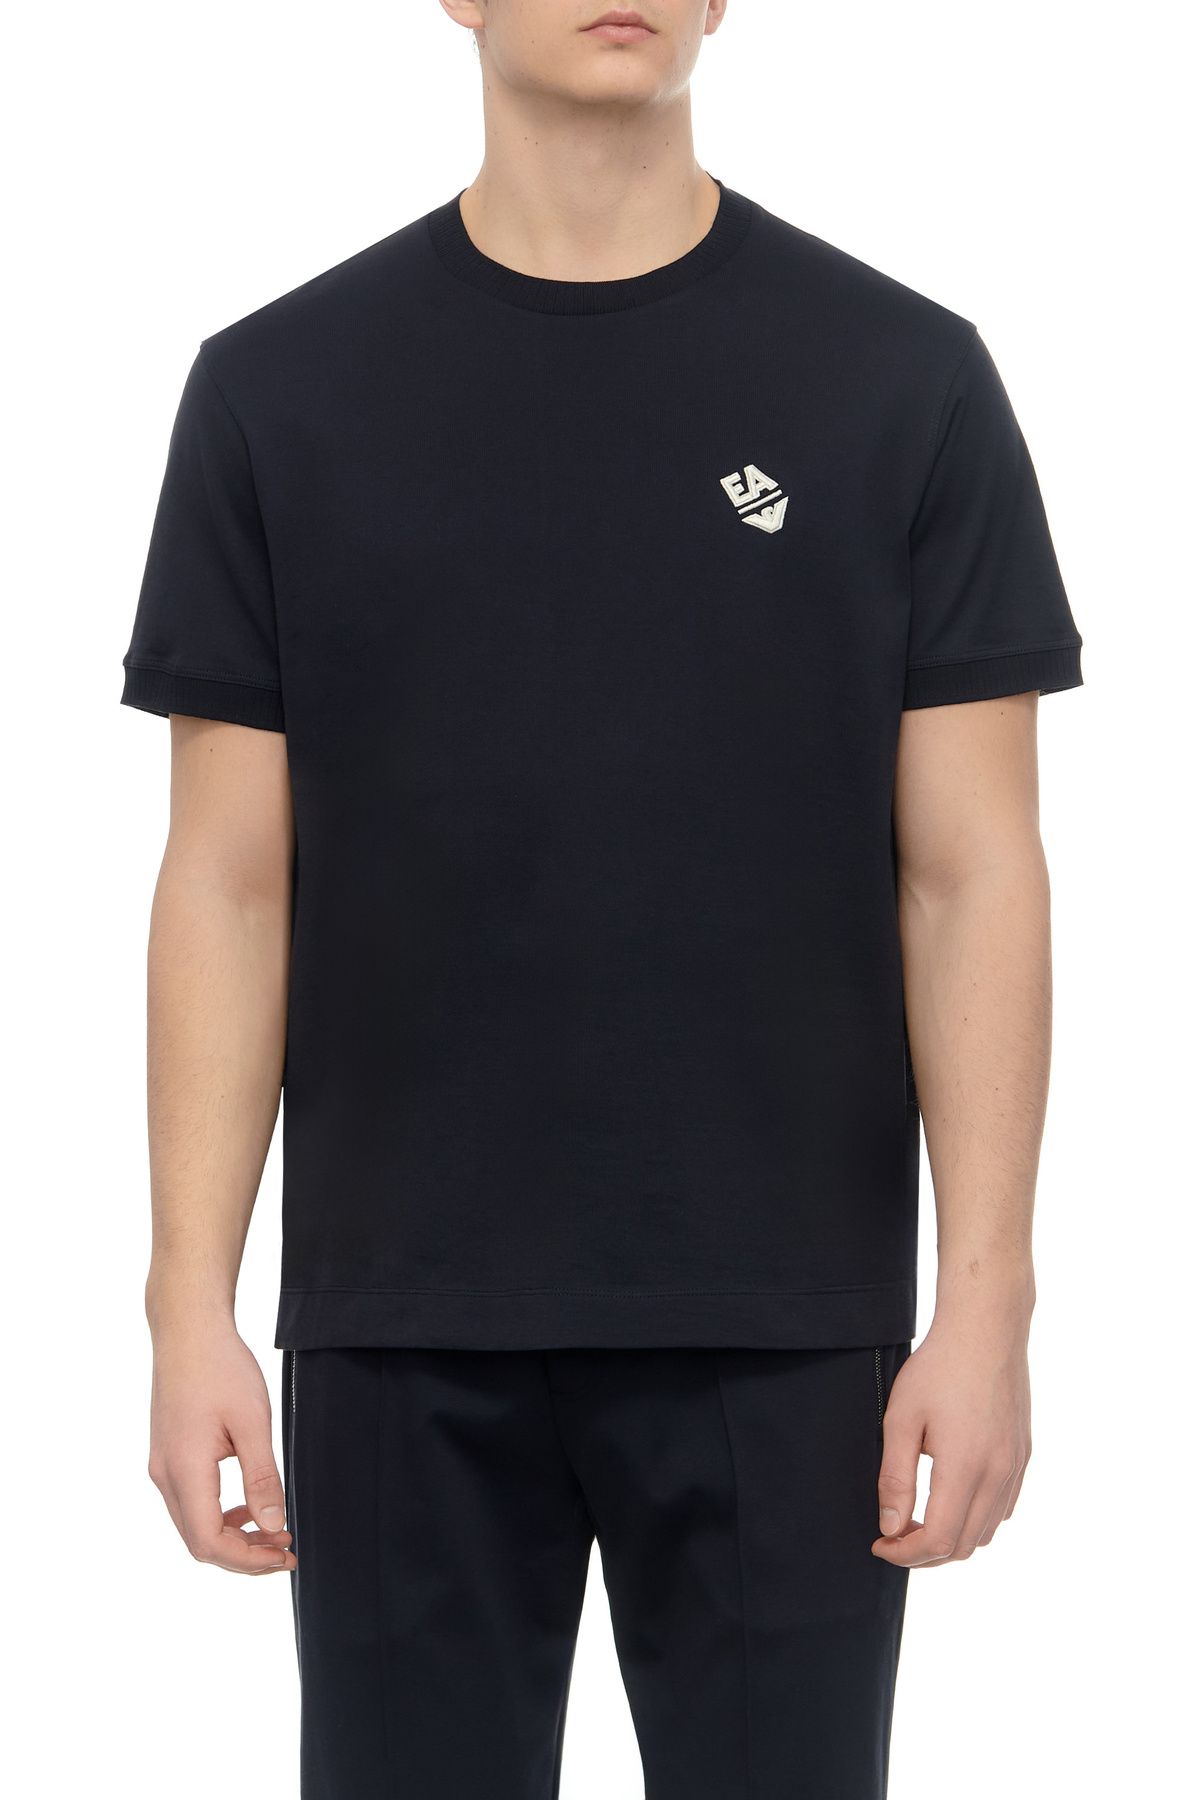 Emporio Armani Erkek Marka Logolu Pamuklu Normal Kalıp Günlük Lacivert T-Shirt 3D1TN3 1JOCZ-0965